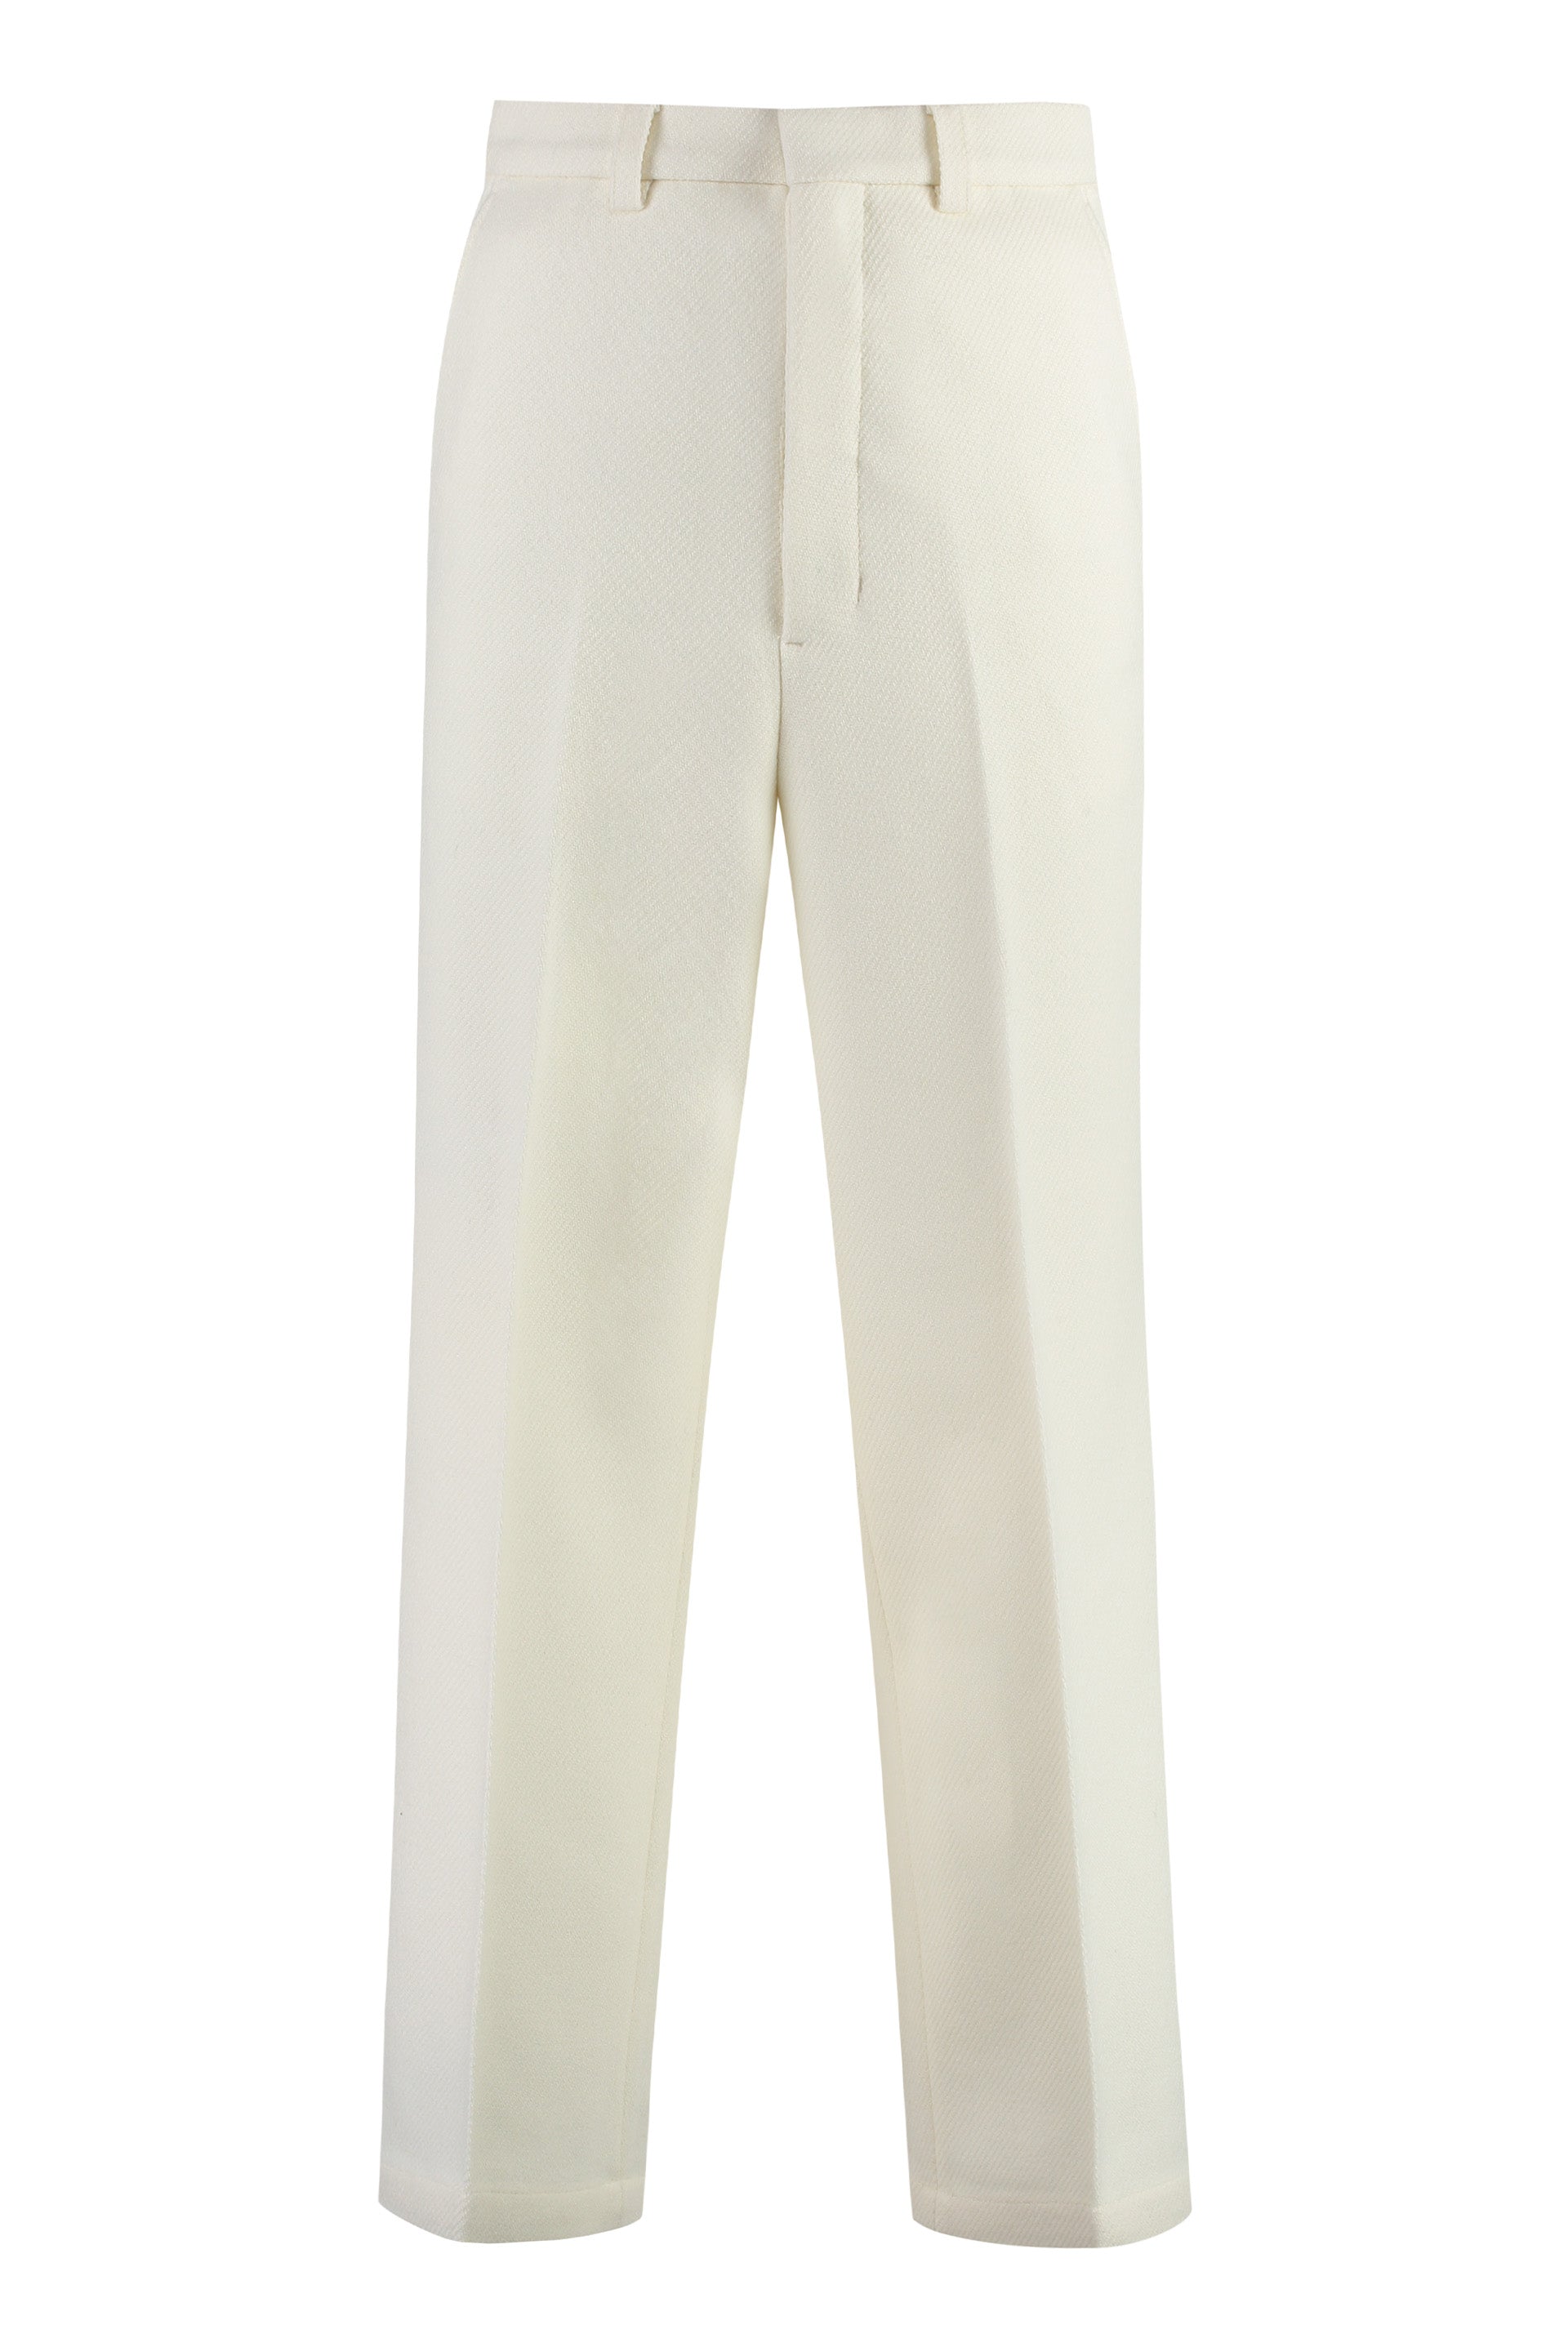 Ami Alexandre Mattiussi Men's White Wool Trousers For Fall/winter '24